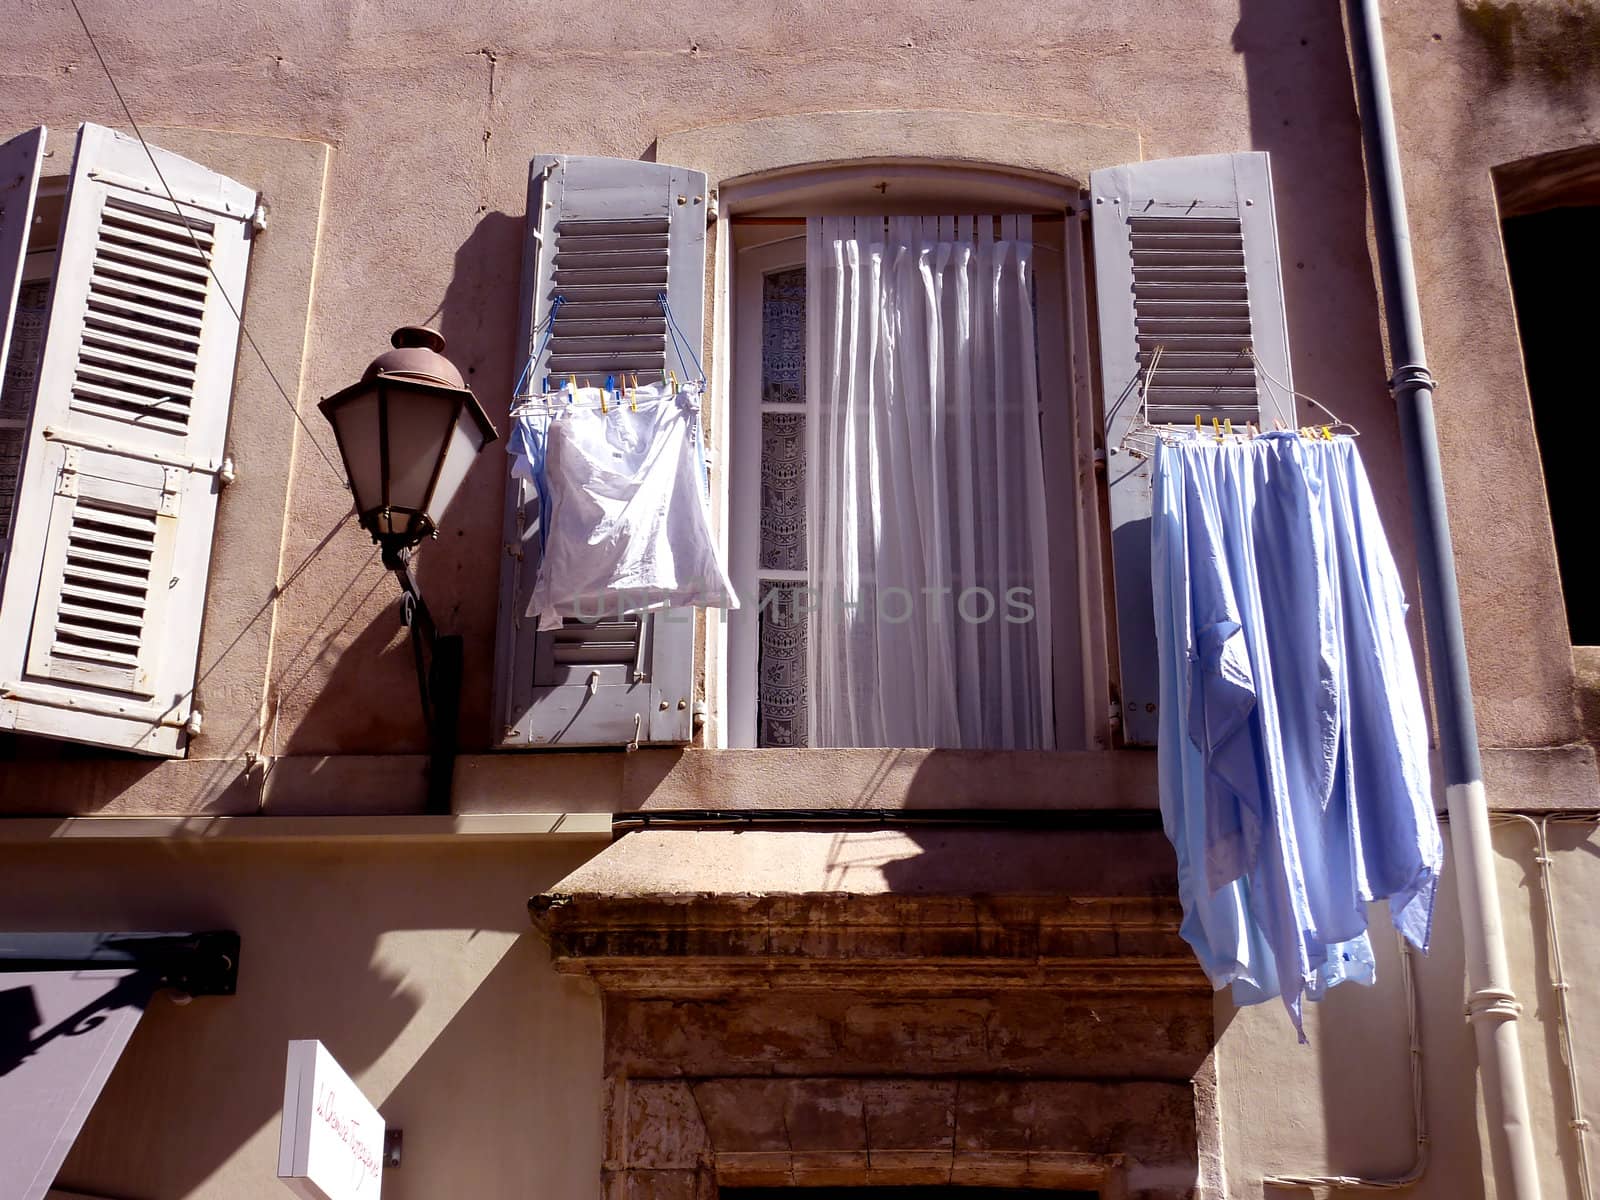 Washing drying by Elenaphotos21